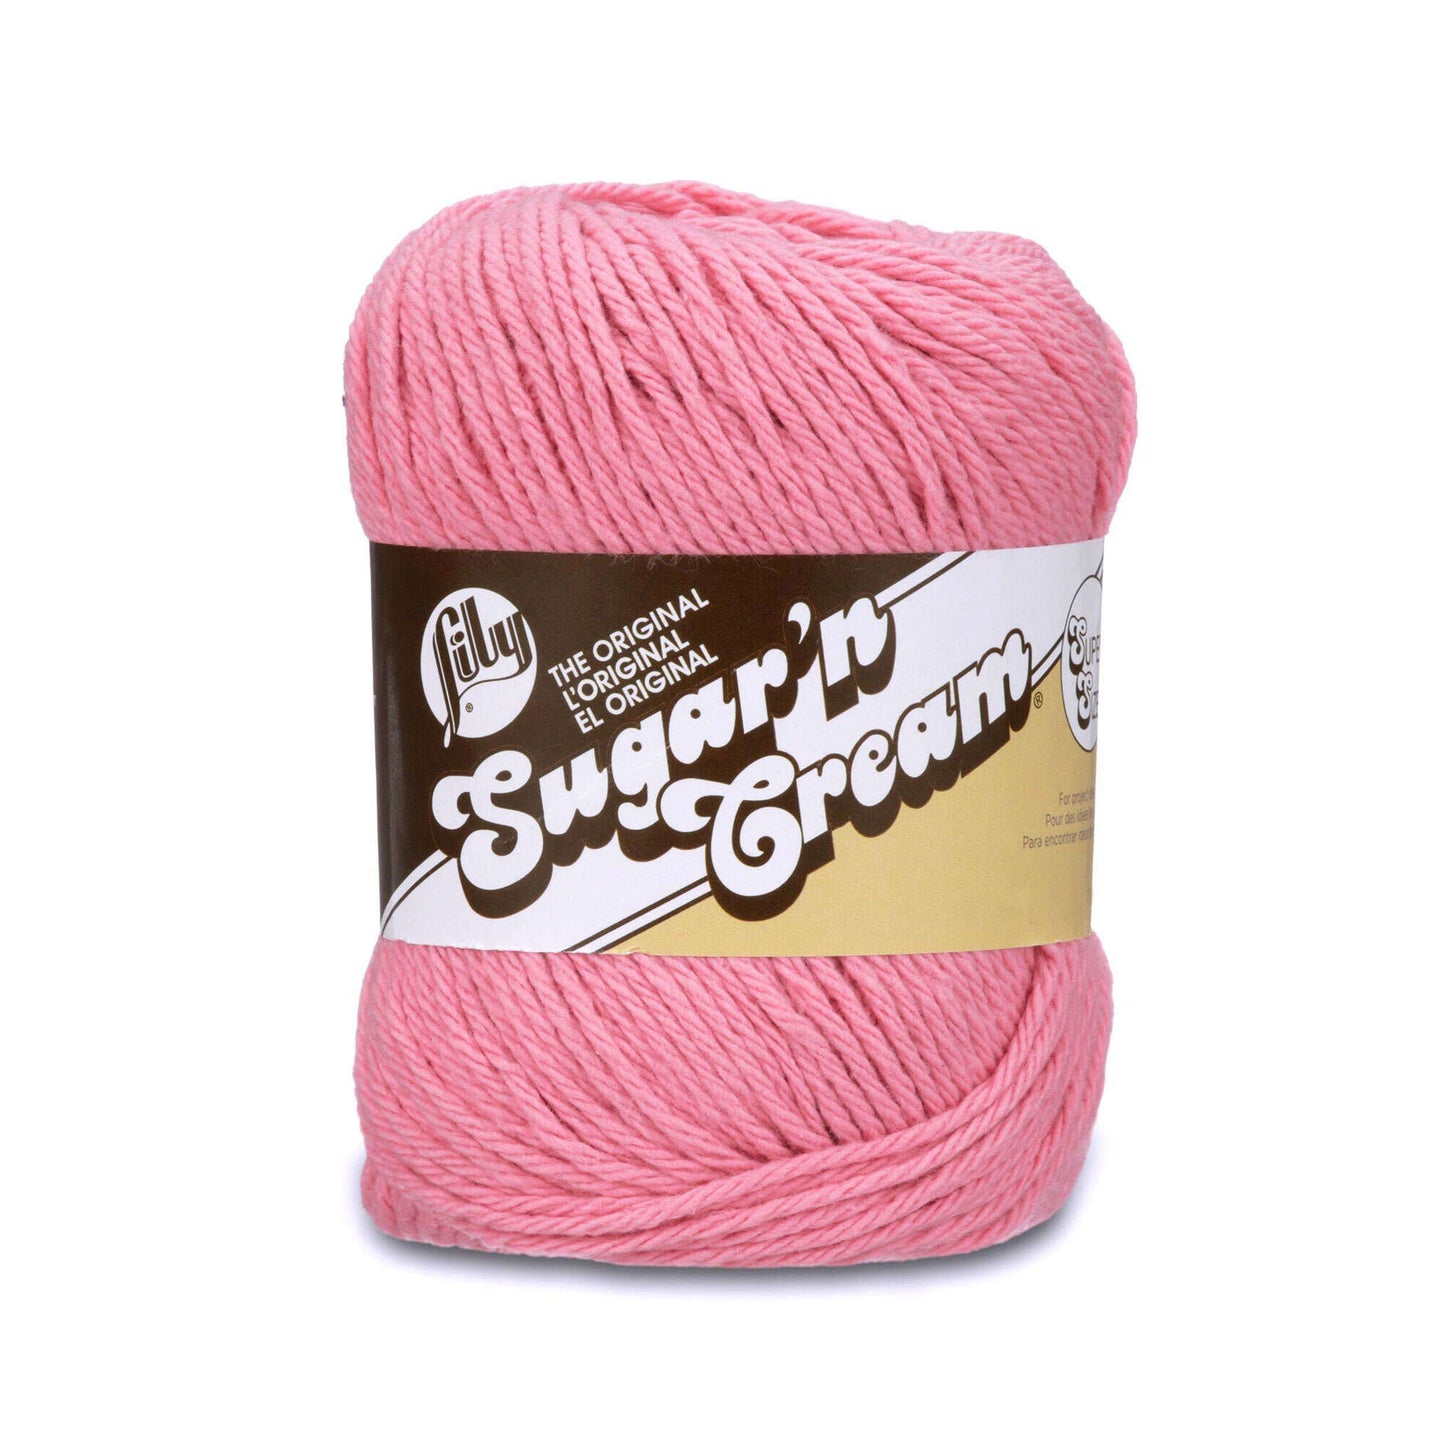 Lily Sugar'n Cream 100% Cotton yarn - Rose Pink Solid SUPER SIZE